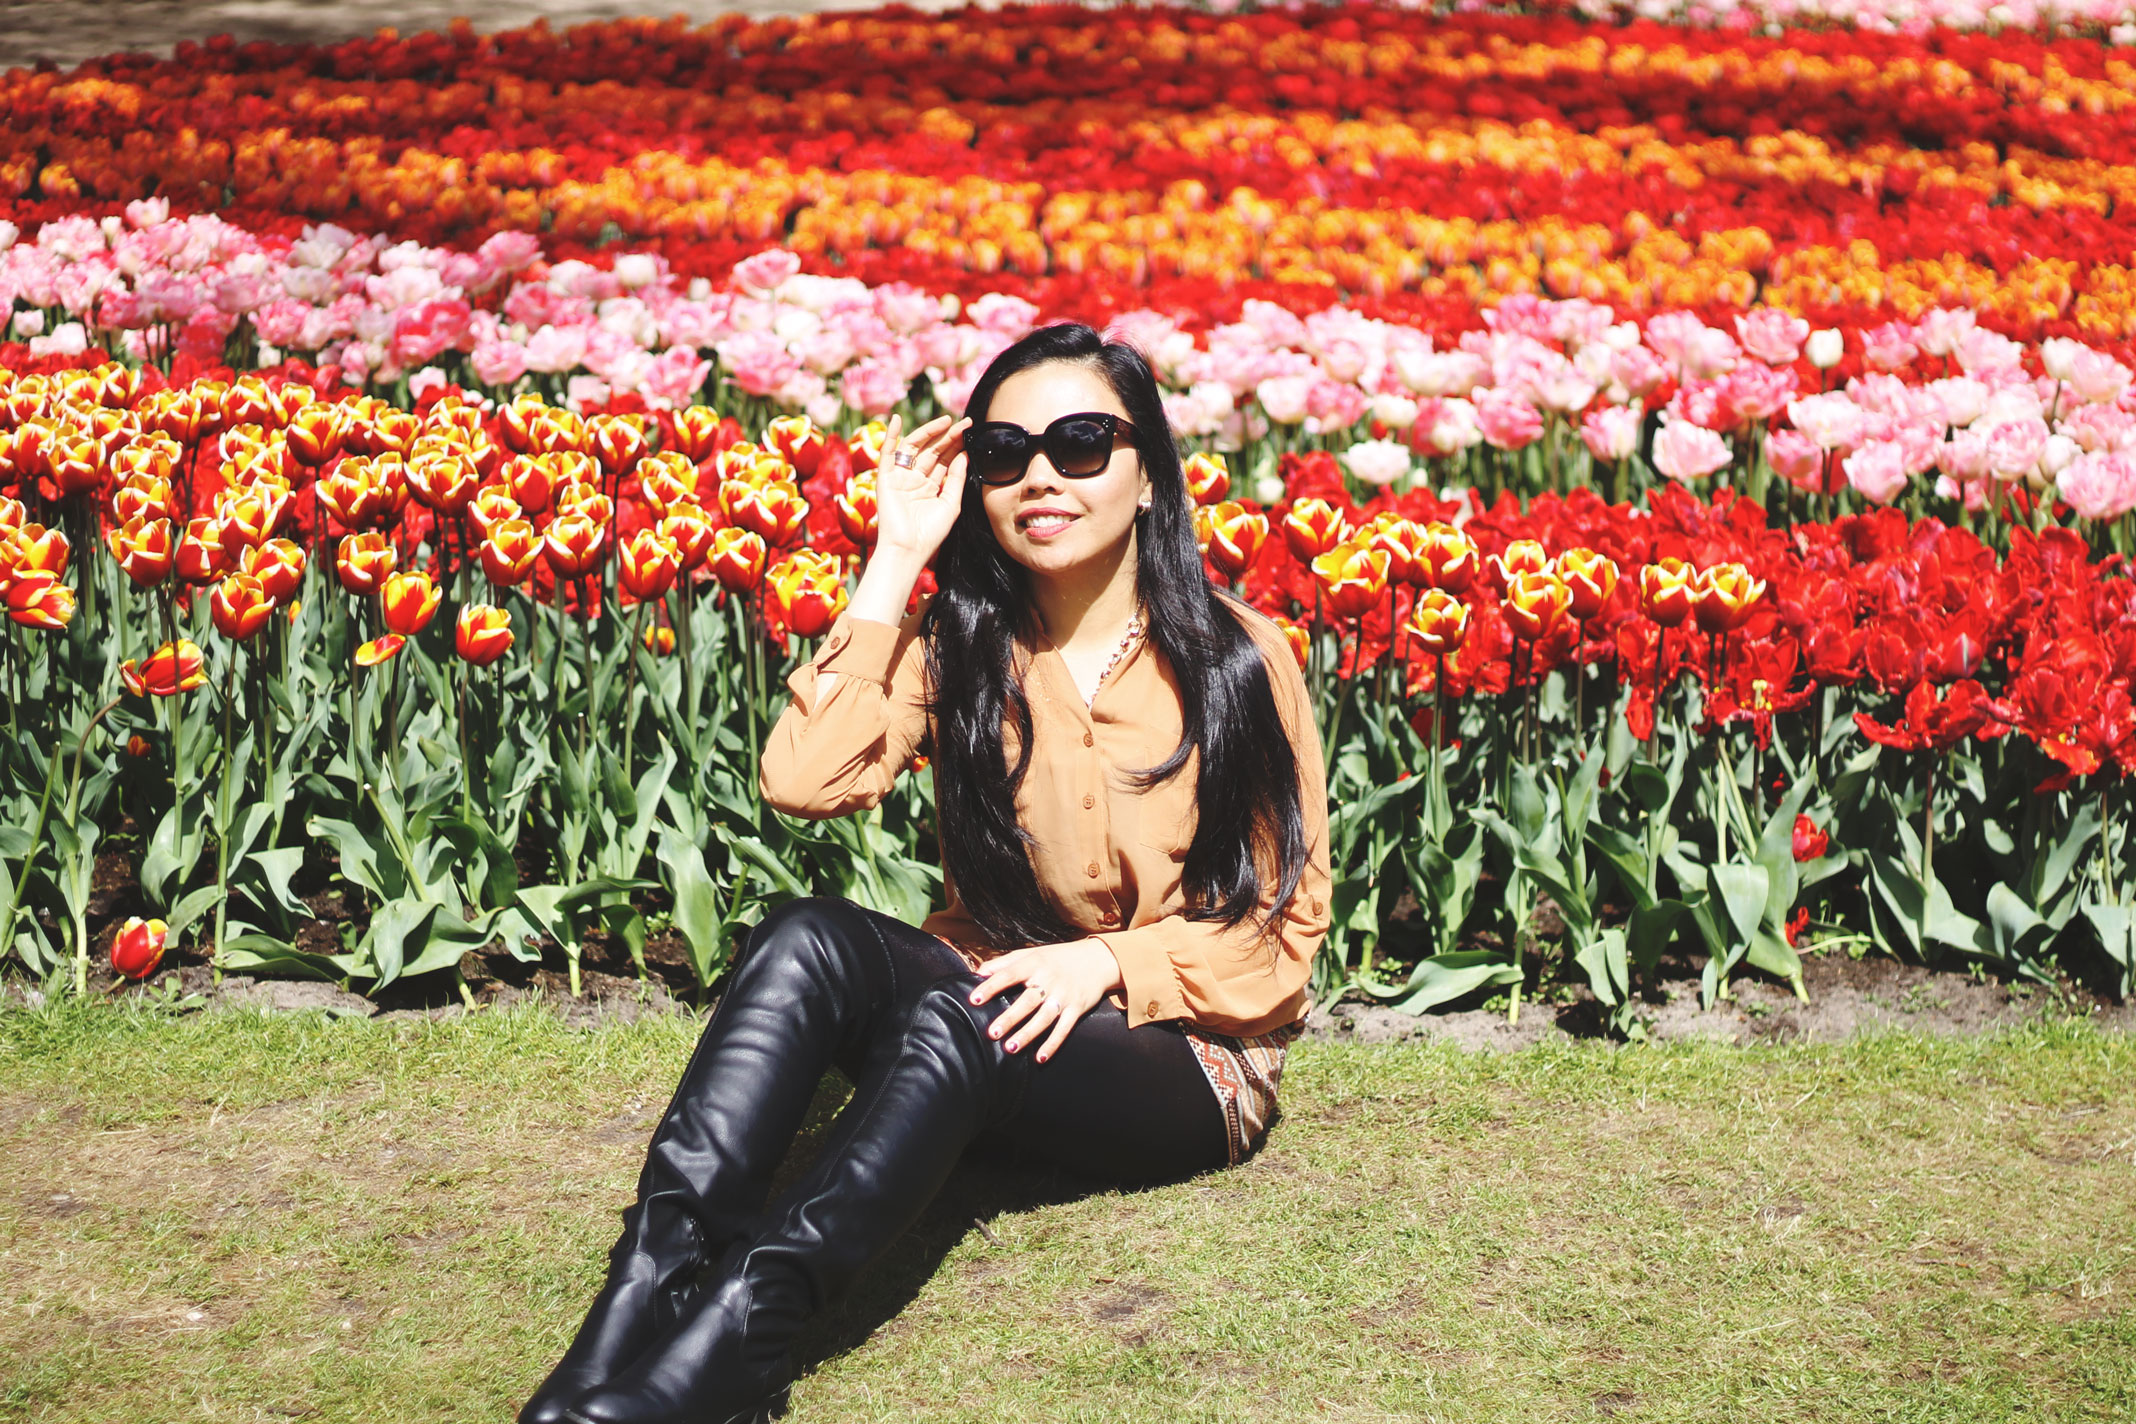 STYLEAT30 Travel + Fashion Blog - Keukenhof Gardens and Tulip Fields Tour from Amsterdam - Holland Tulips - 28